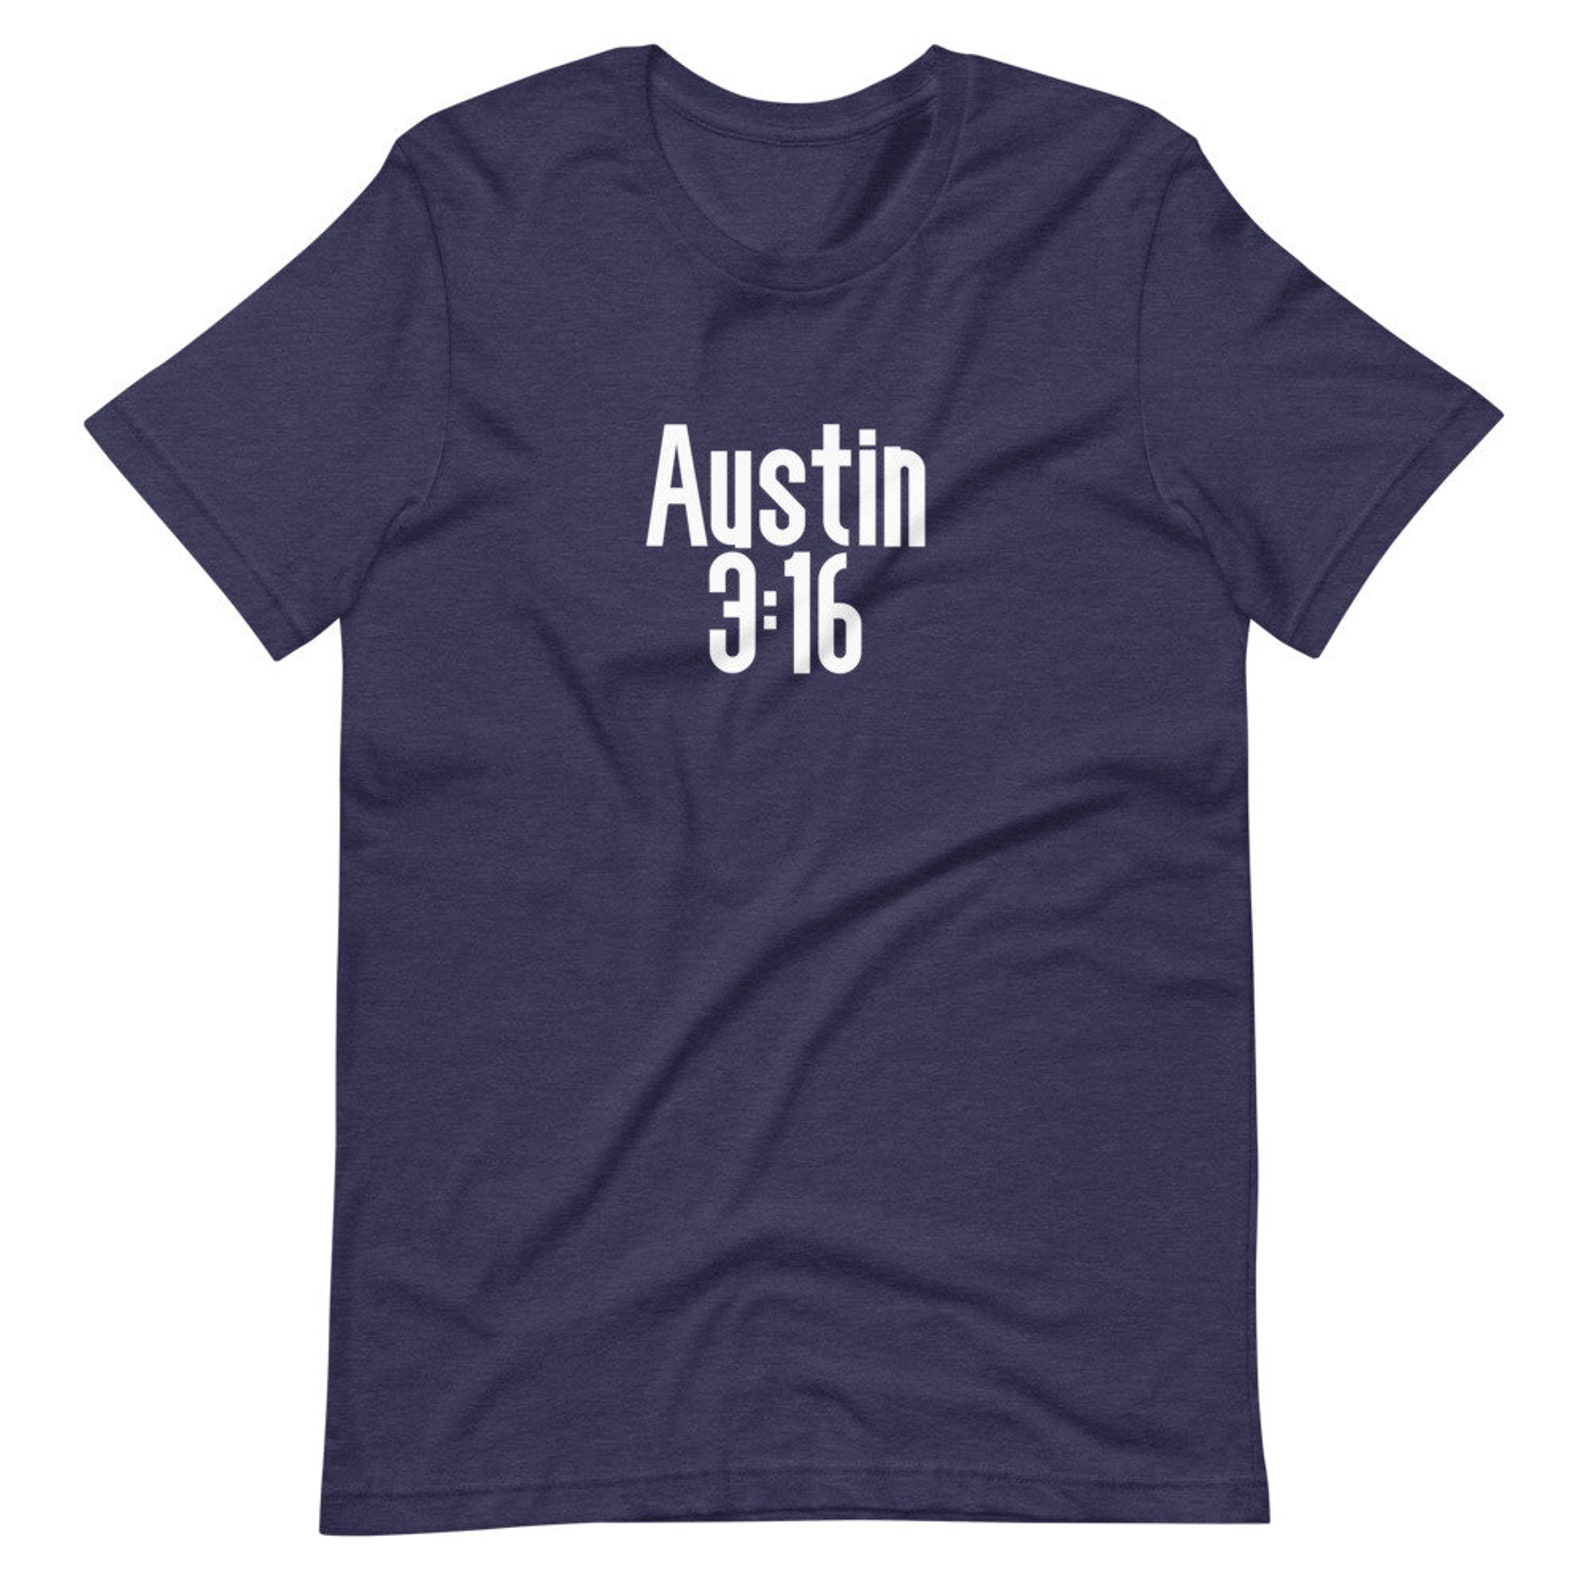 Austin 3 16 shirt Austin 3:16 T-Shirt References Stone | Etsy